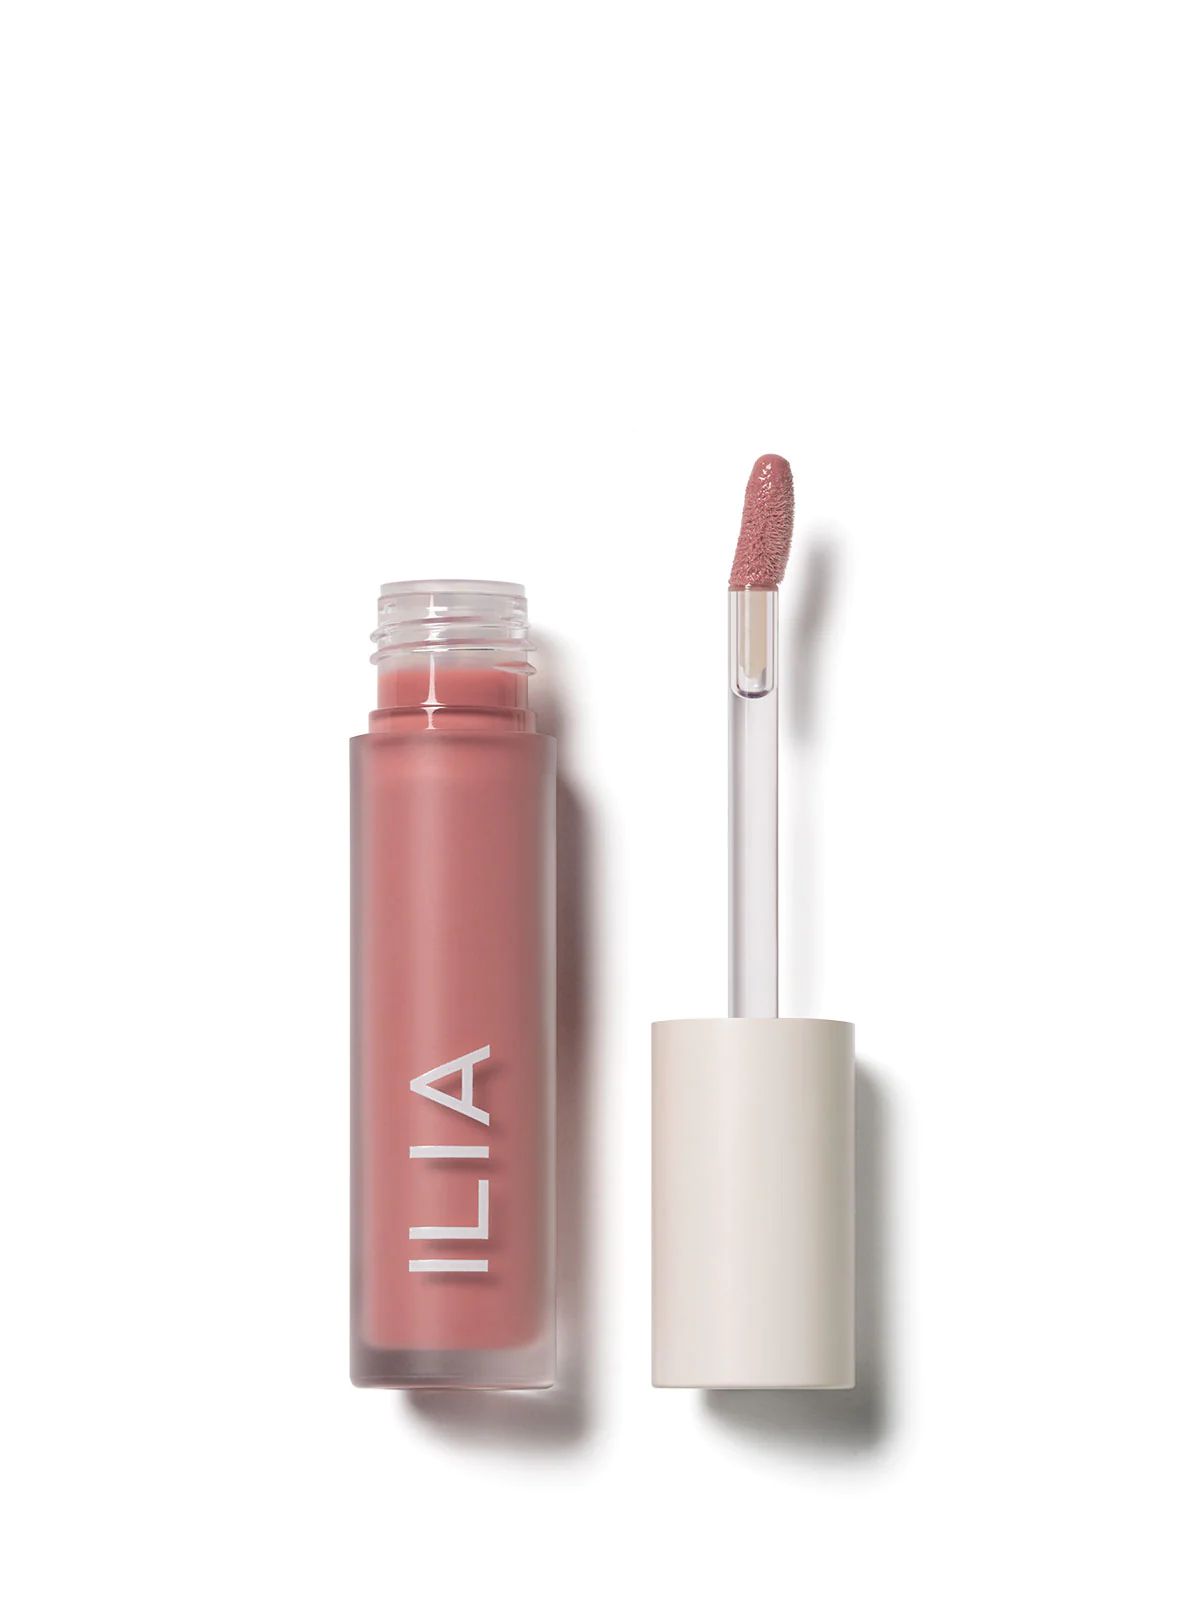 ILIA Balmy Gloss: Neutral Nude - Tinted Lip Oil | ILIA Beauty | ILIA Beauty